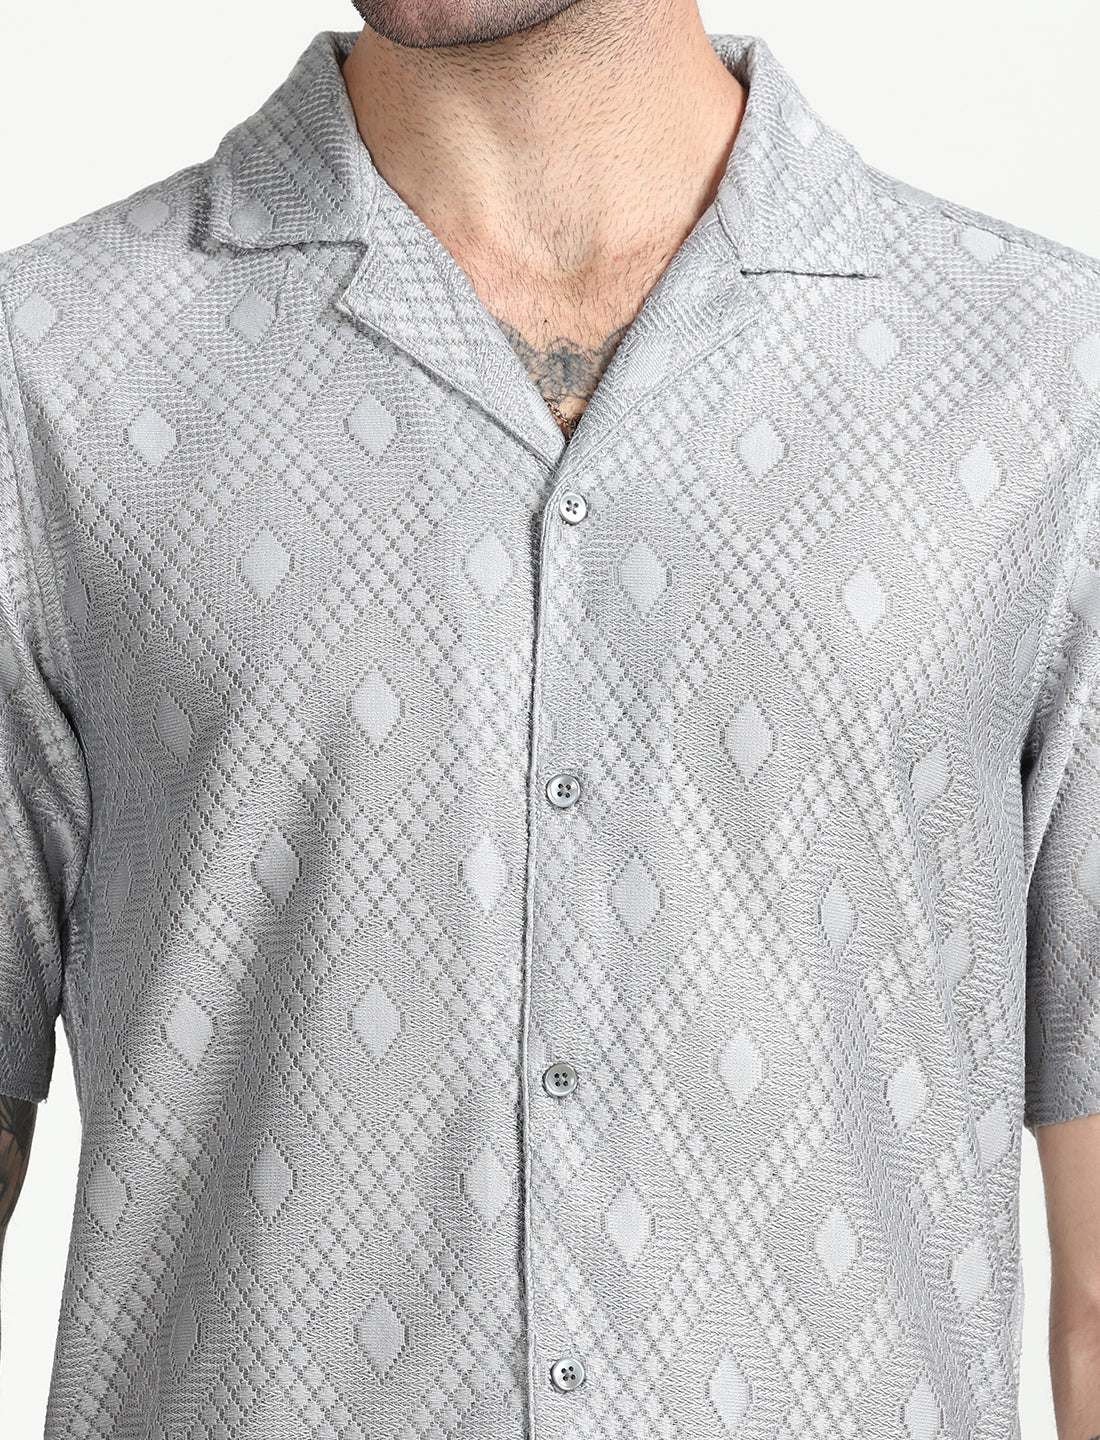 Grey Crochet Half Sleeve Shirt